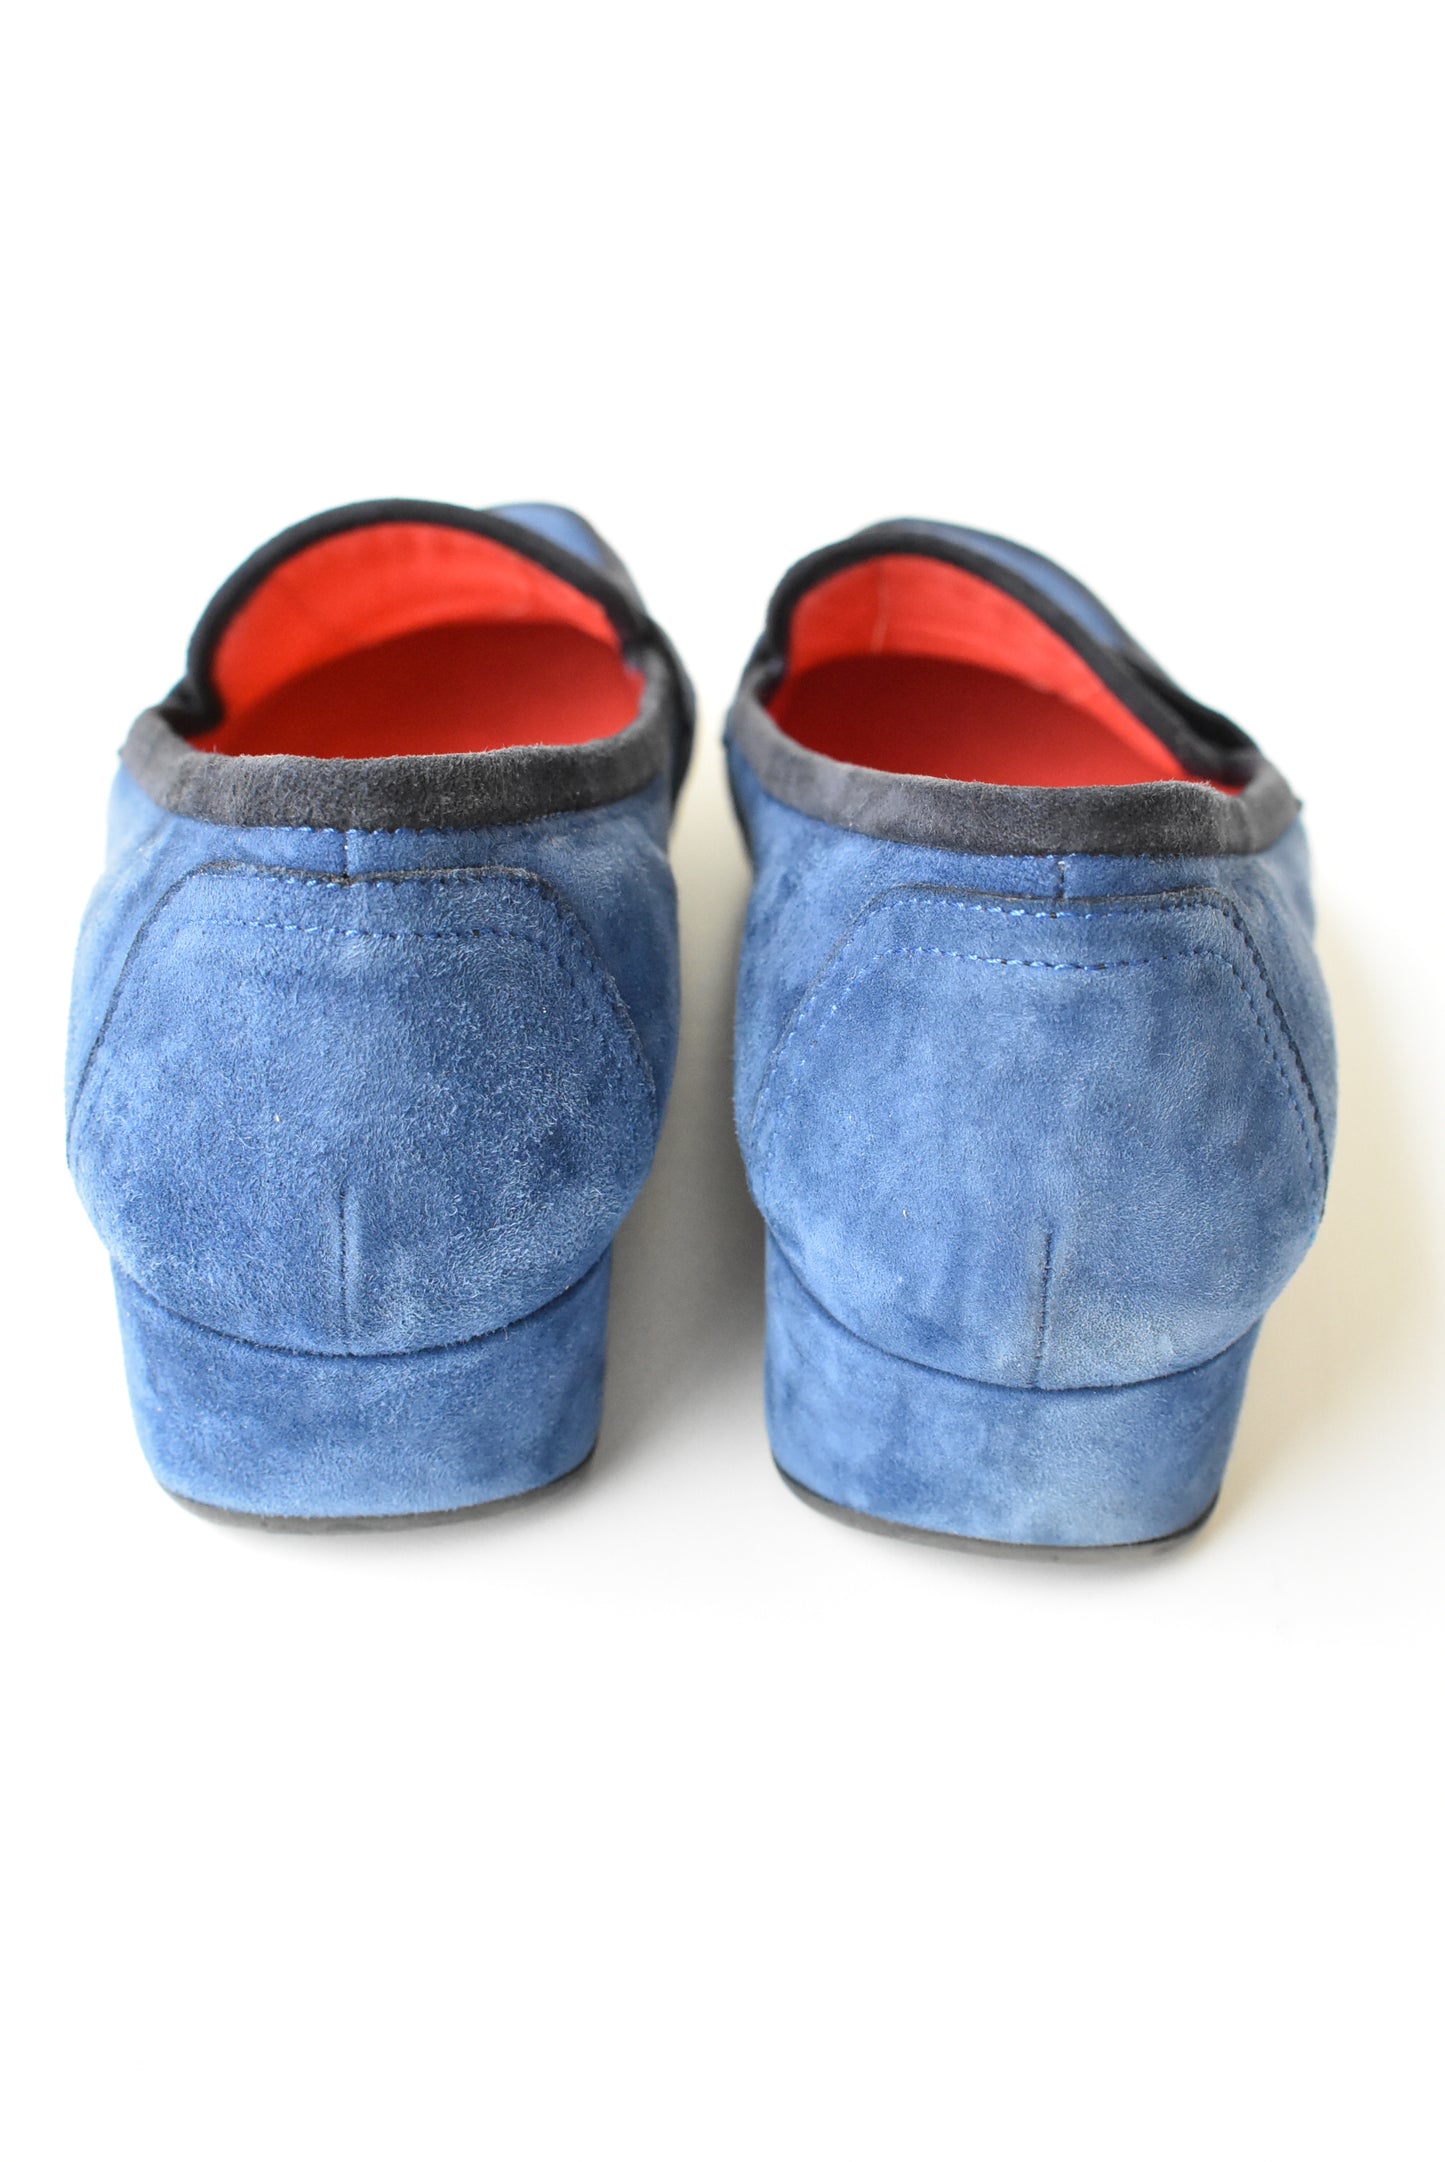 Pas de Rouge blue suede shoes, Italian made